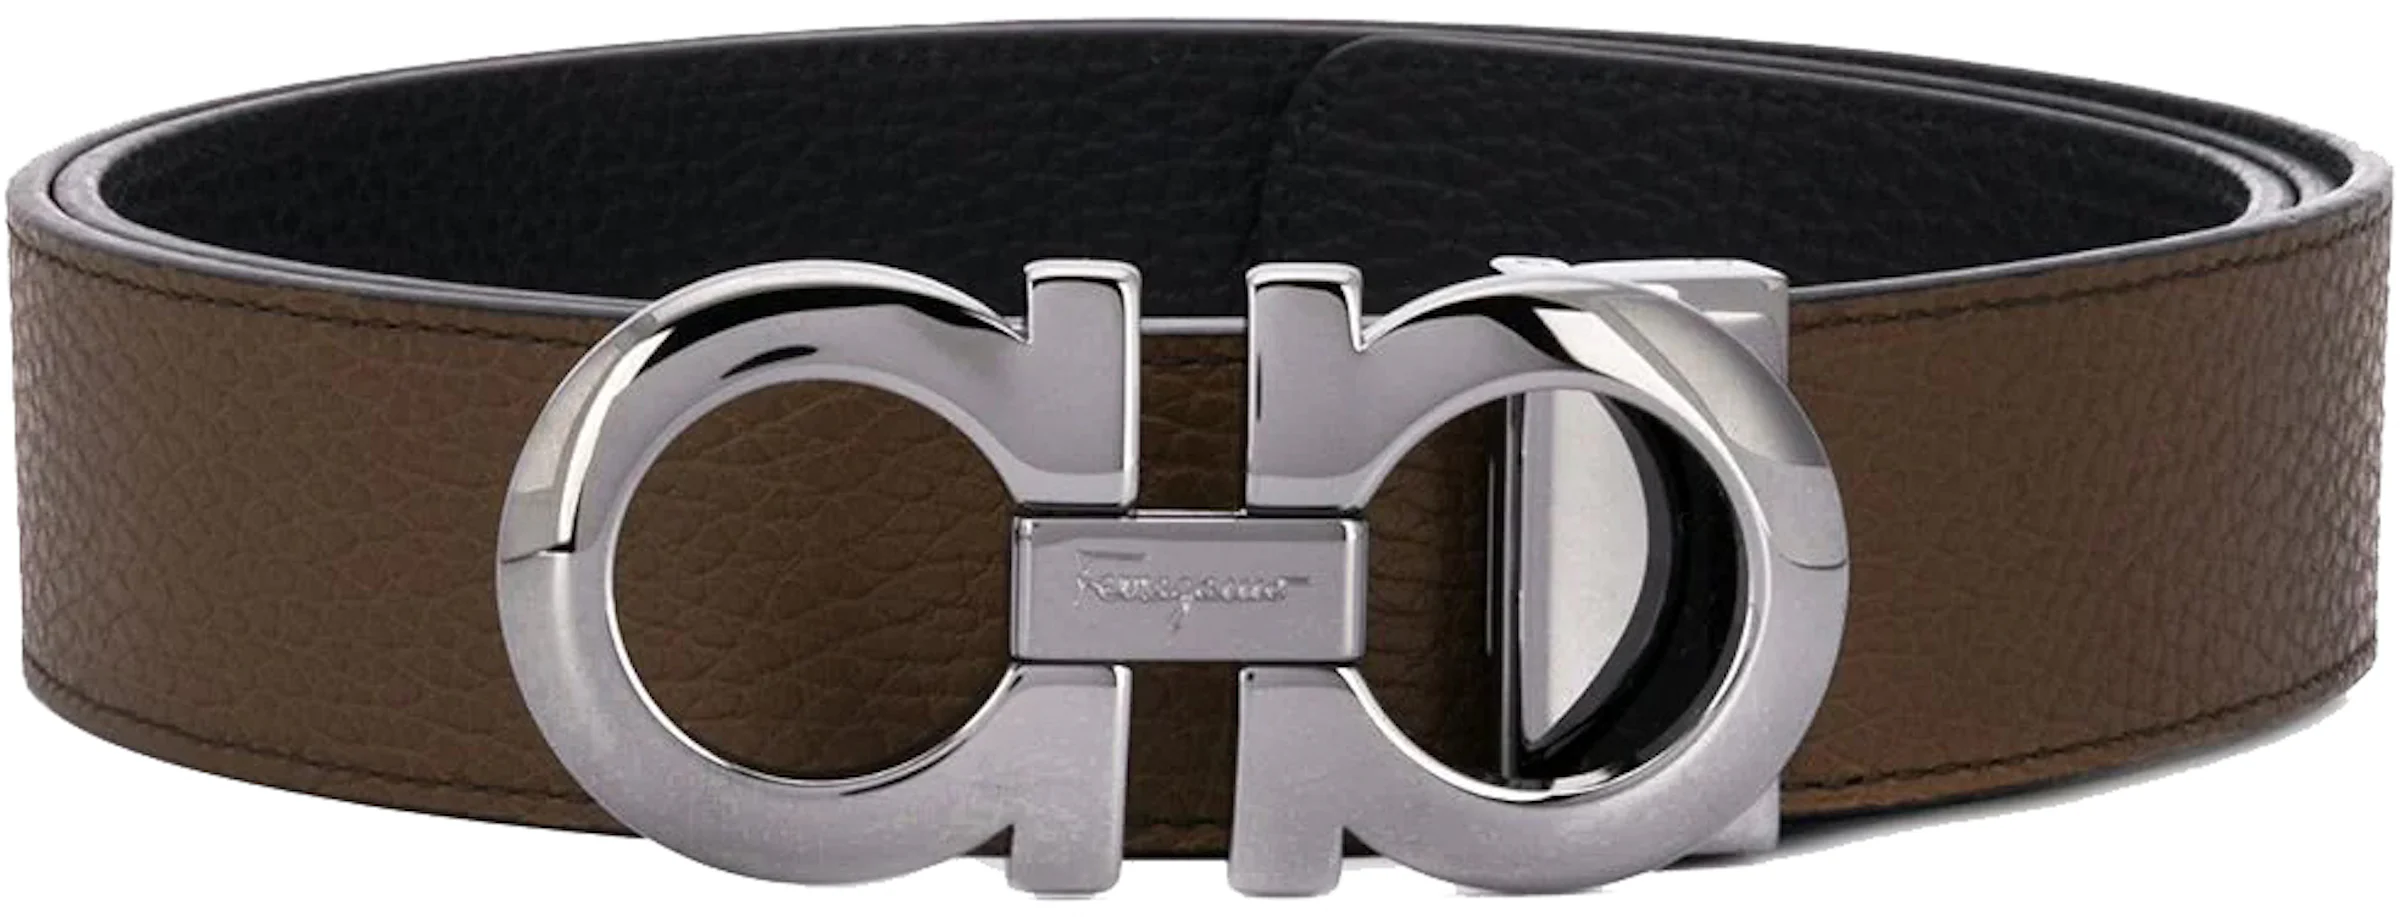 Ferragamo Gancini Reversible & Adjustable Leather Belt in Brown for Men